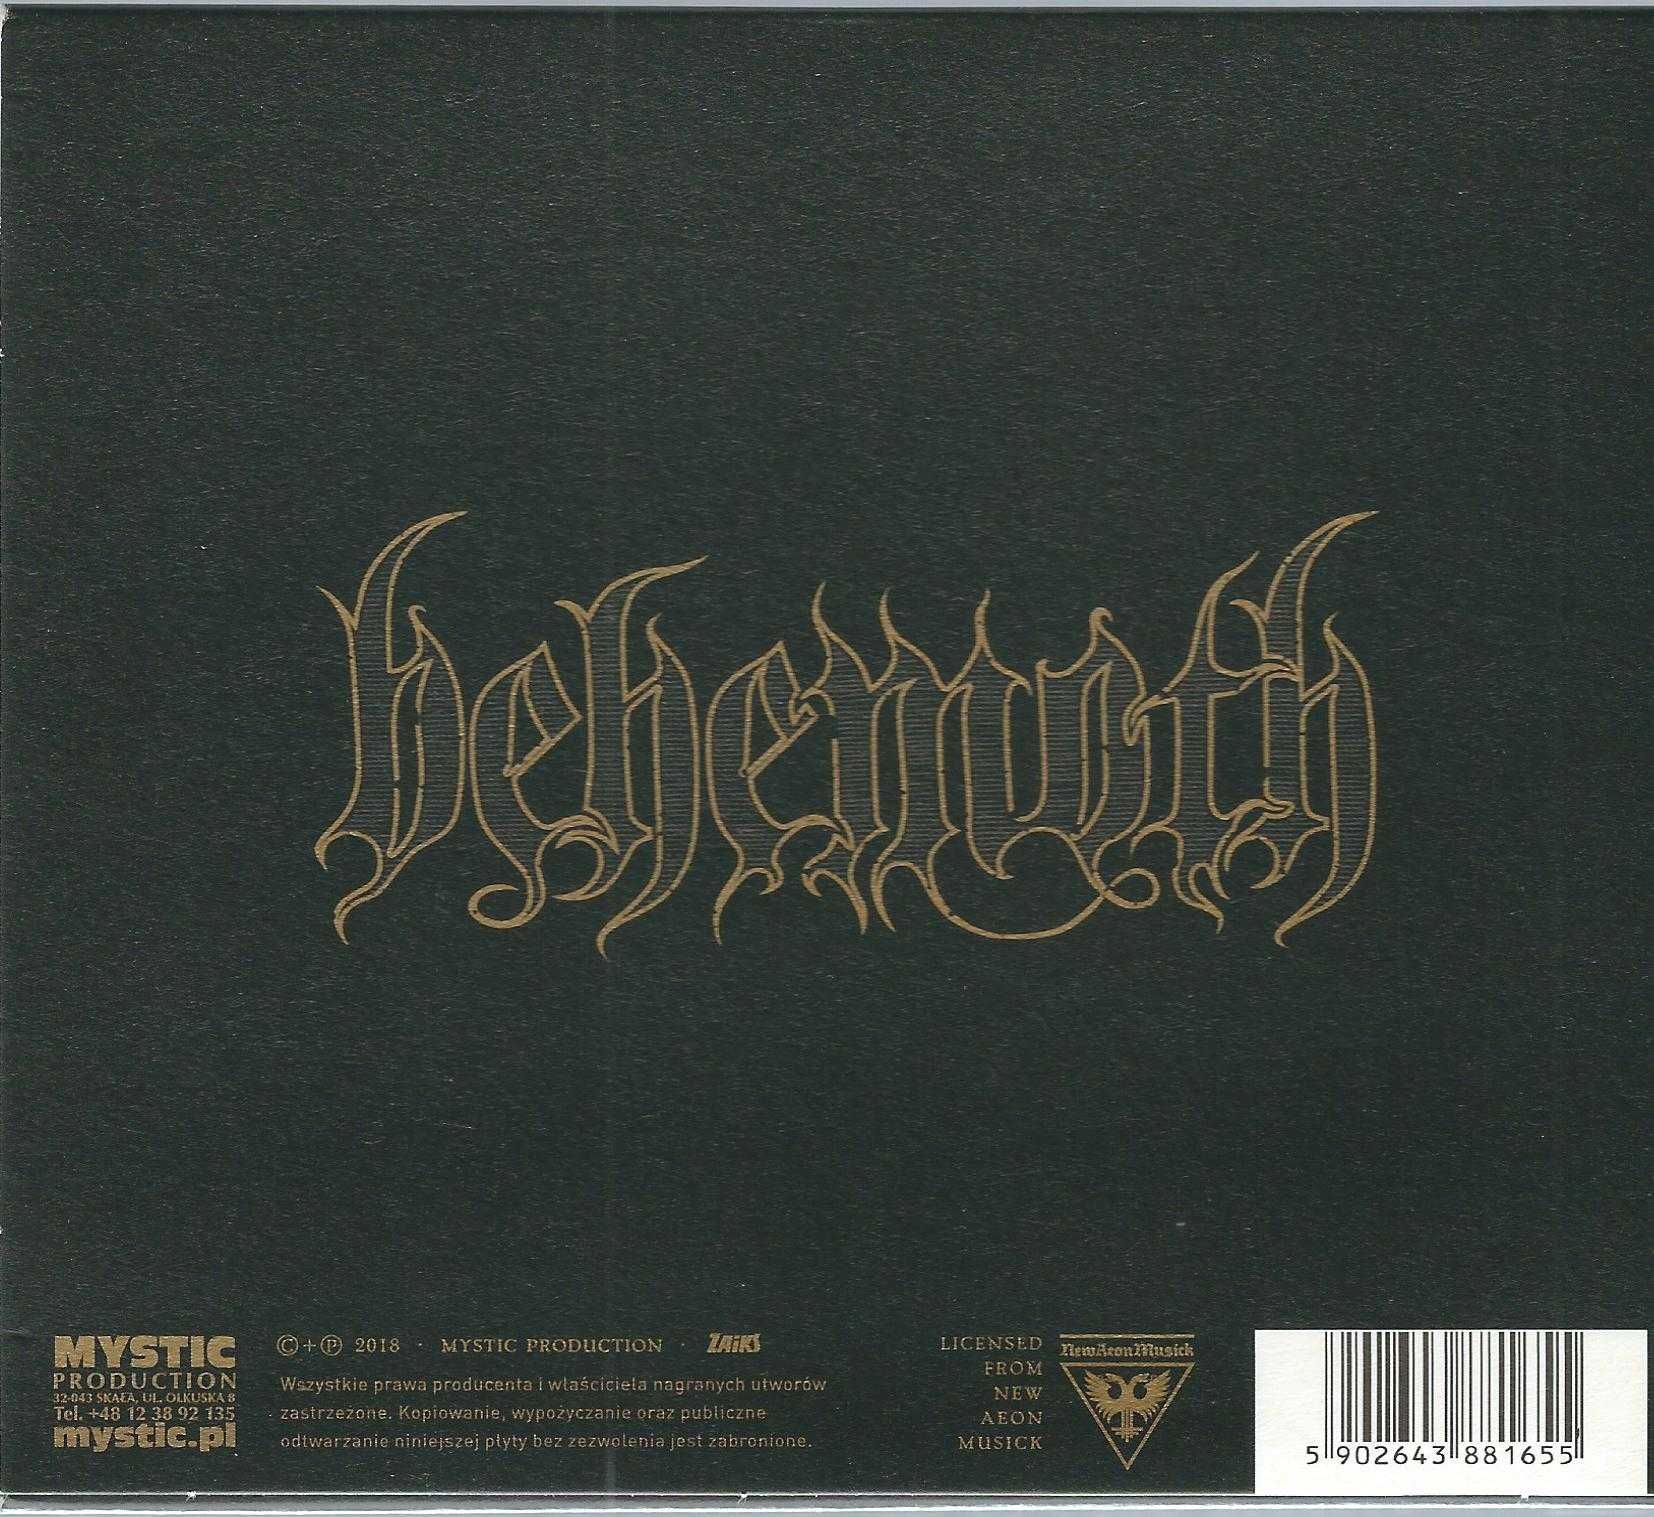 CD Behemoth - I Loved You At Your Darkest (2018 Slipcover)